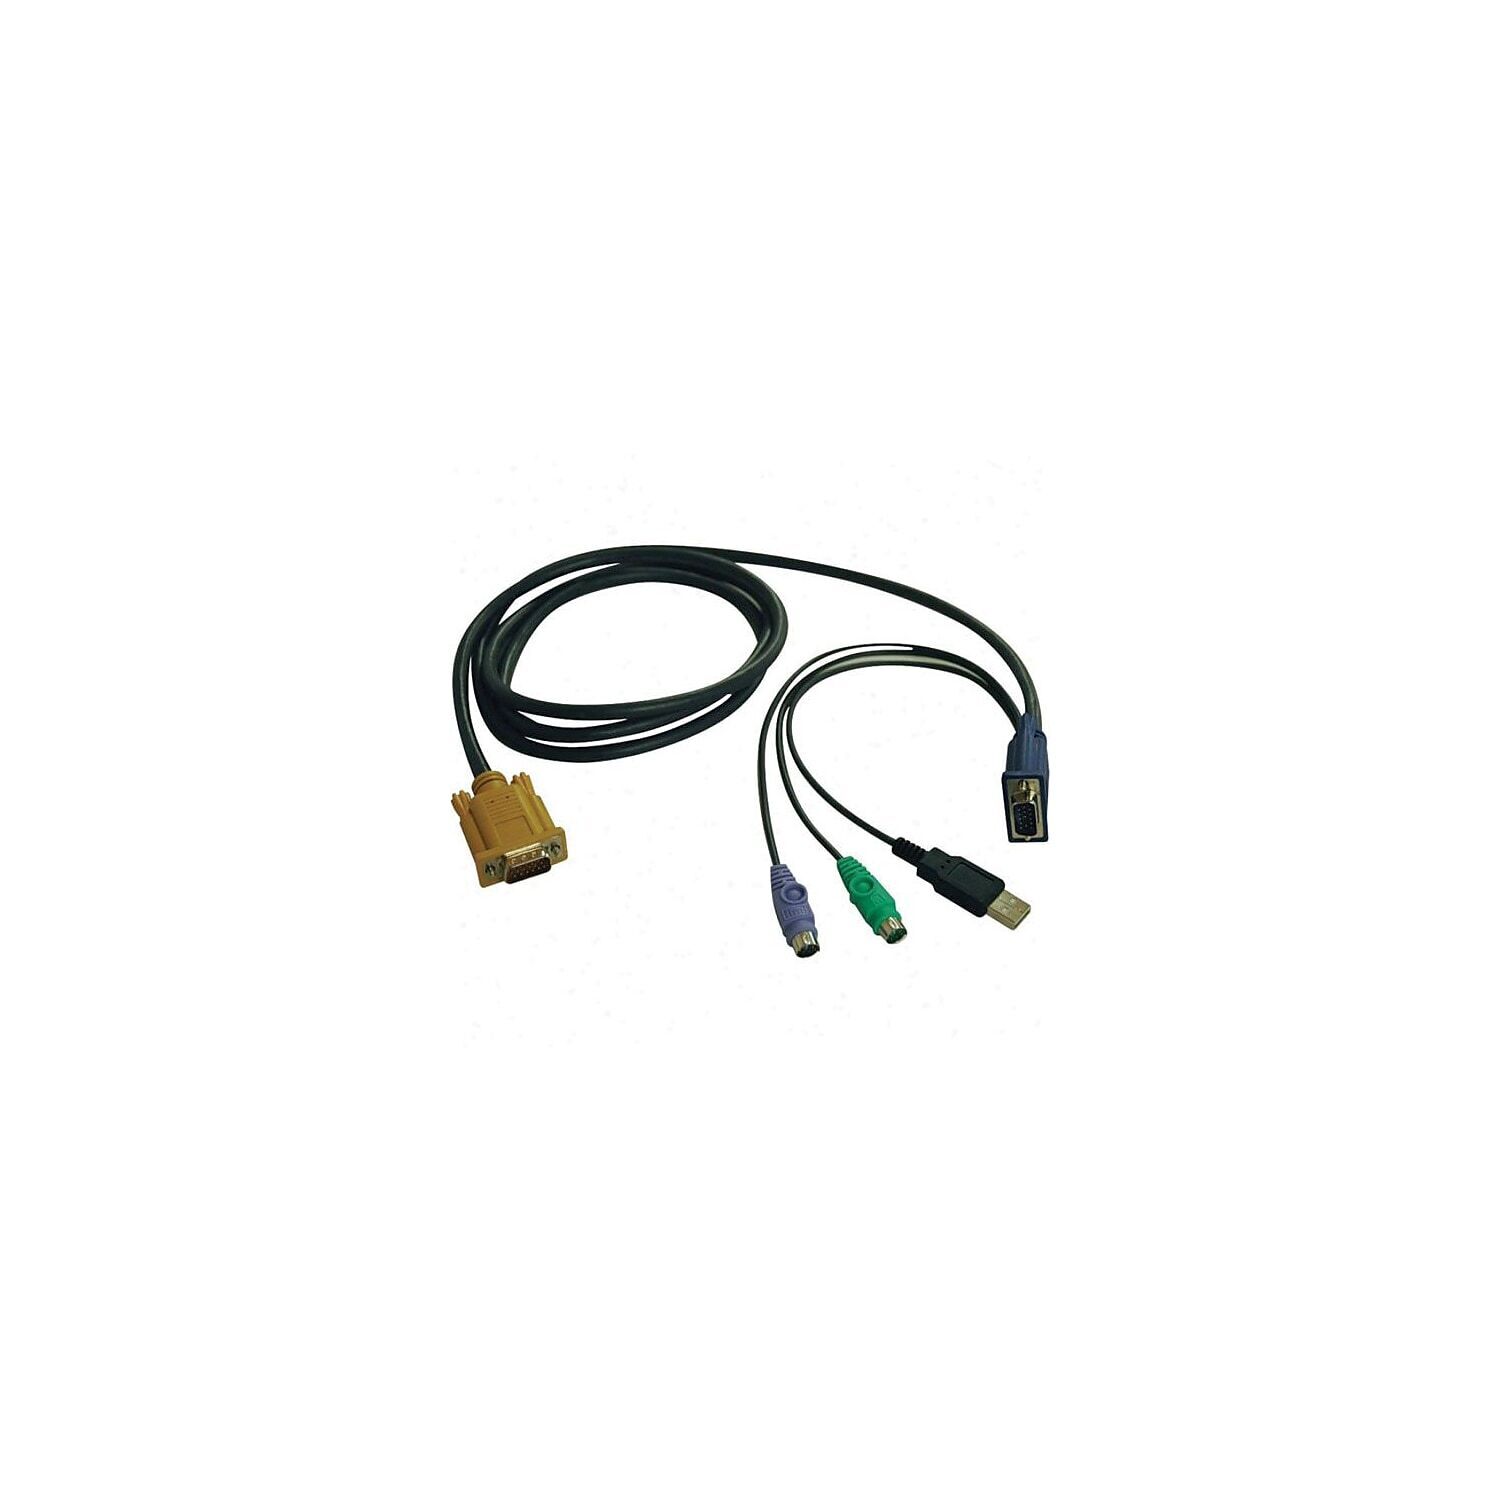 Tripp Lite P778-006 KVM Switch USB/PS2 Combo Cable 6'